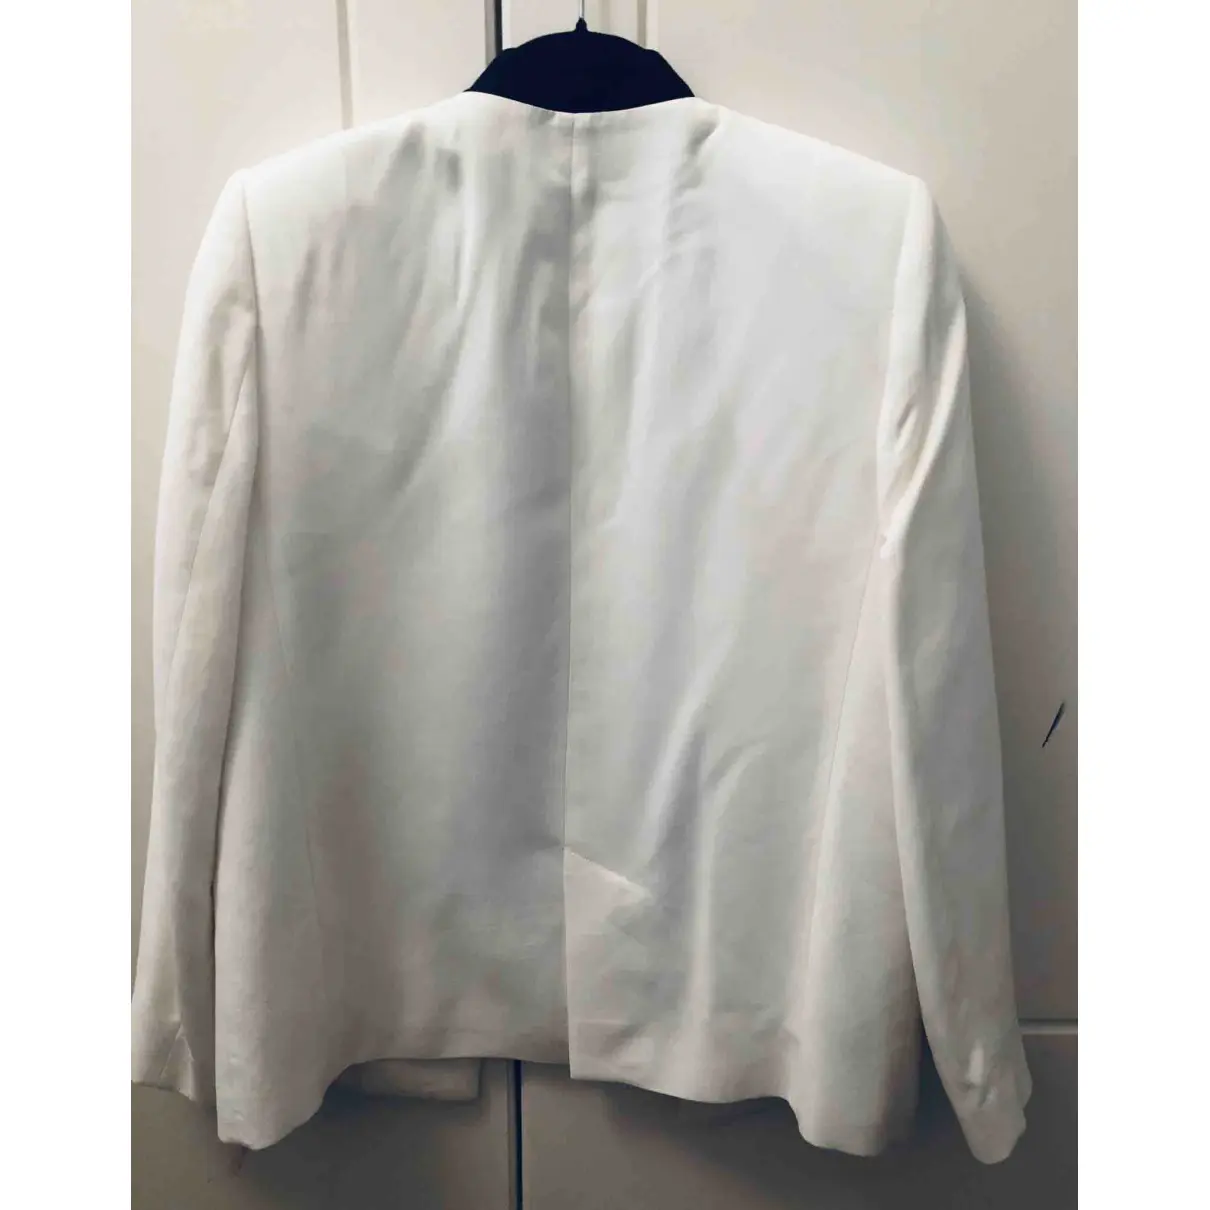 Buy Zara White Cotton Jacket online